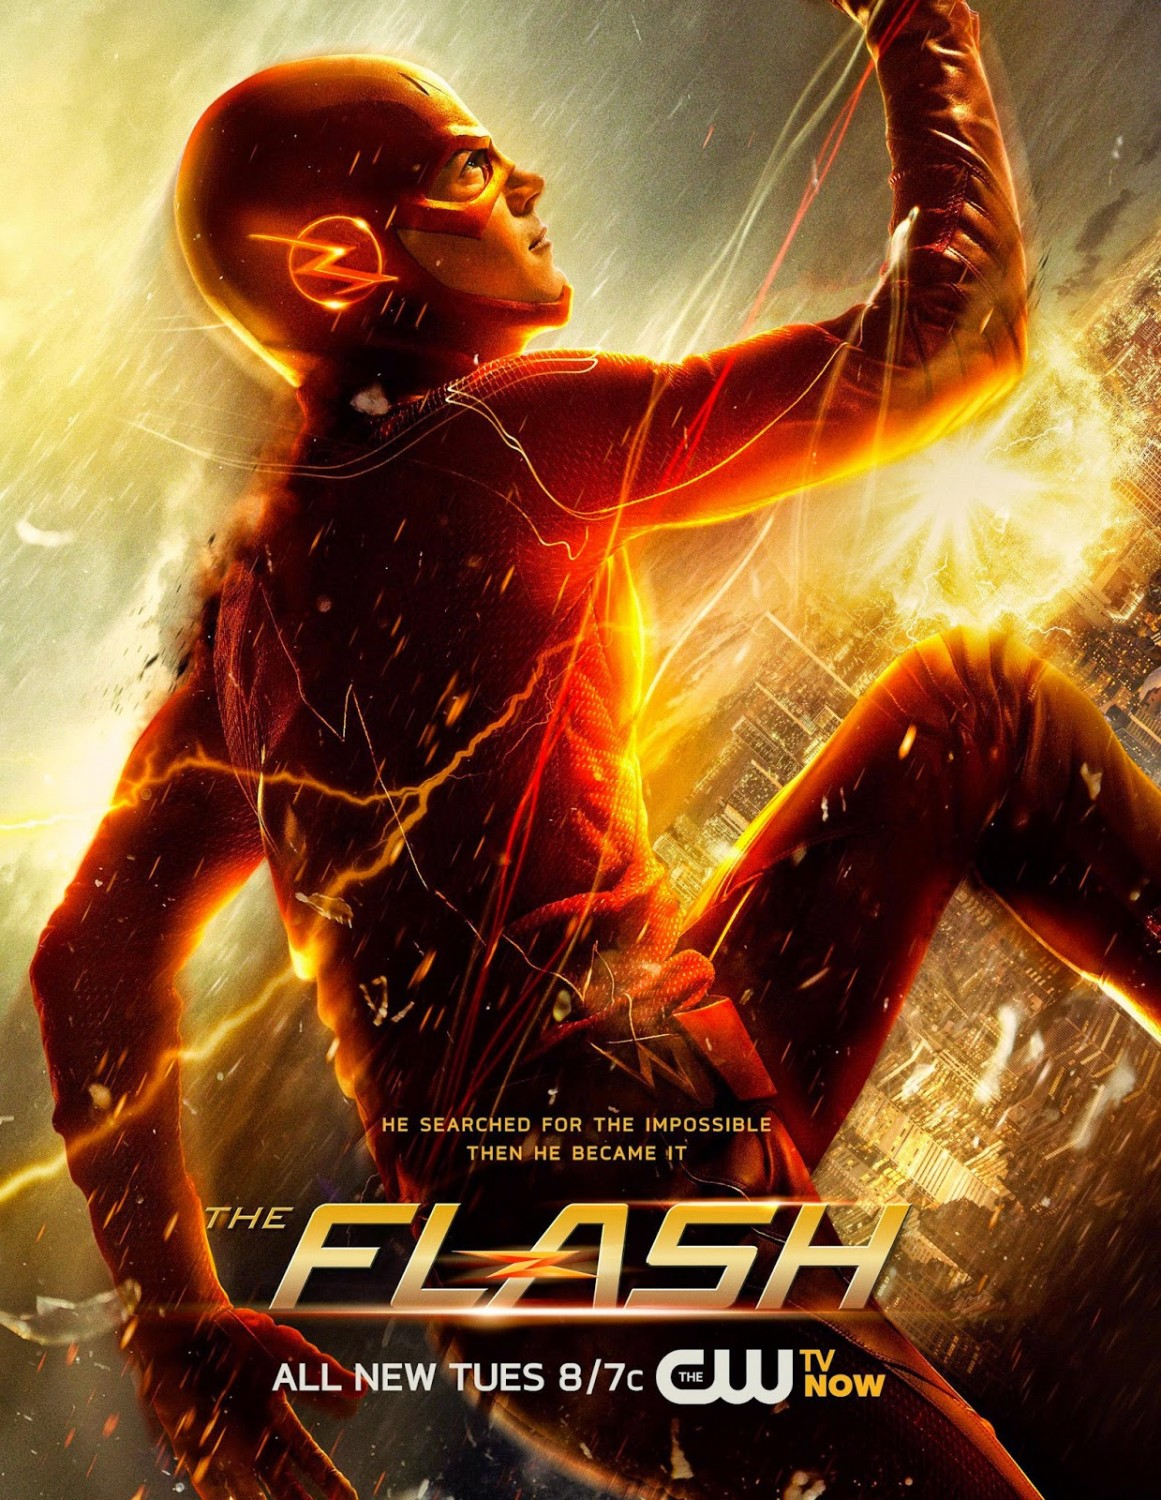 The Flash (2014) Backgrounds, Compatible - PC, Mobile, Gadgets| 1161x1500 px